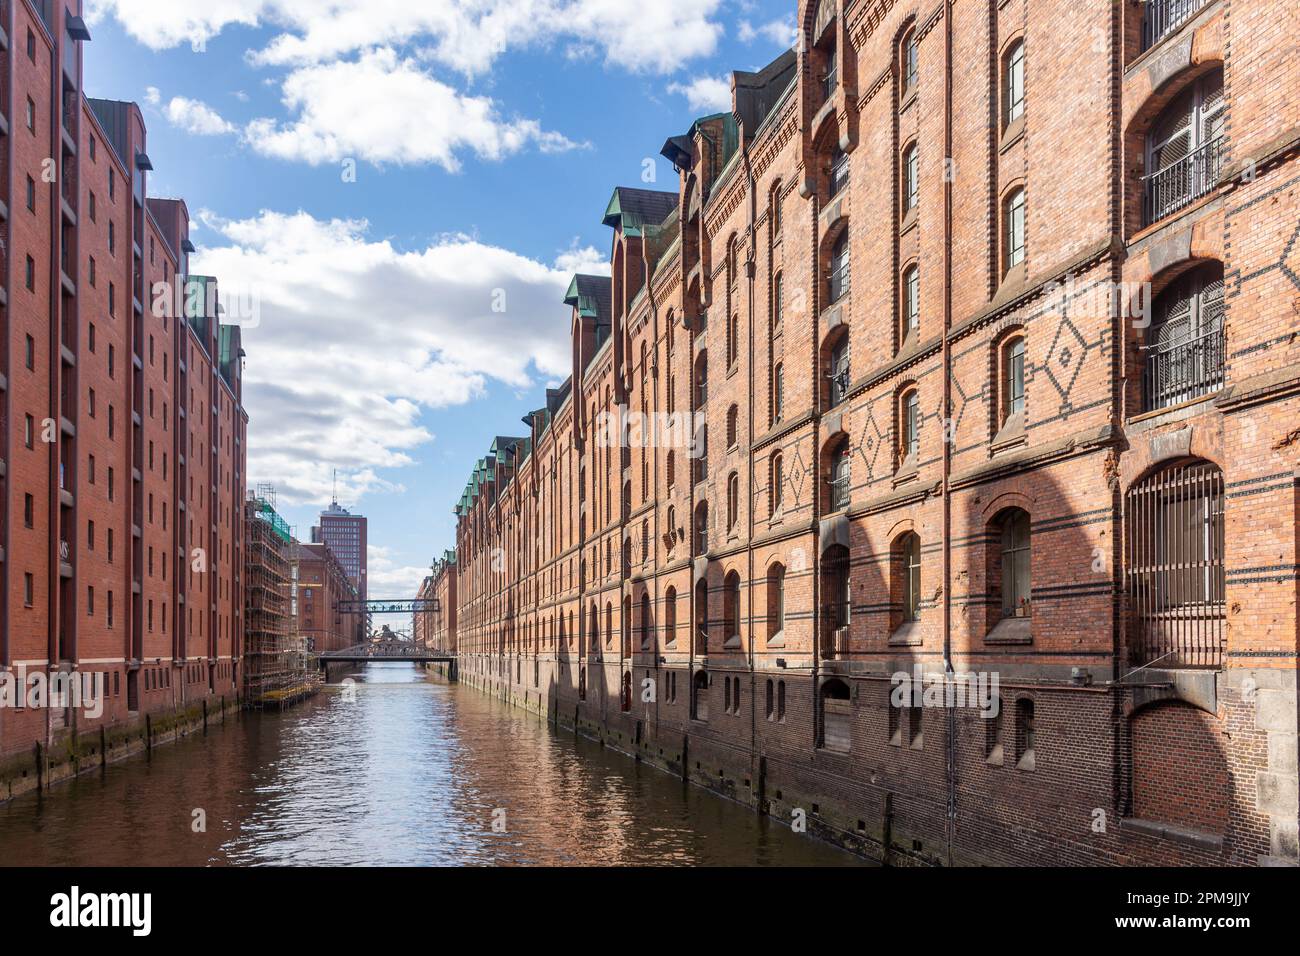 Old warehouses on canal, Speicherstadt District, HalfenCity Quarter, Hamburg, Hamburg Metropolitan Region, Federal Republic of Germany Stock Photo